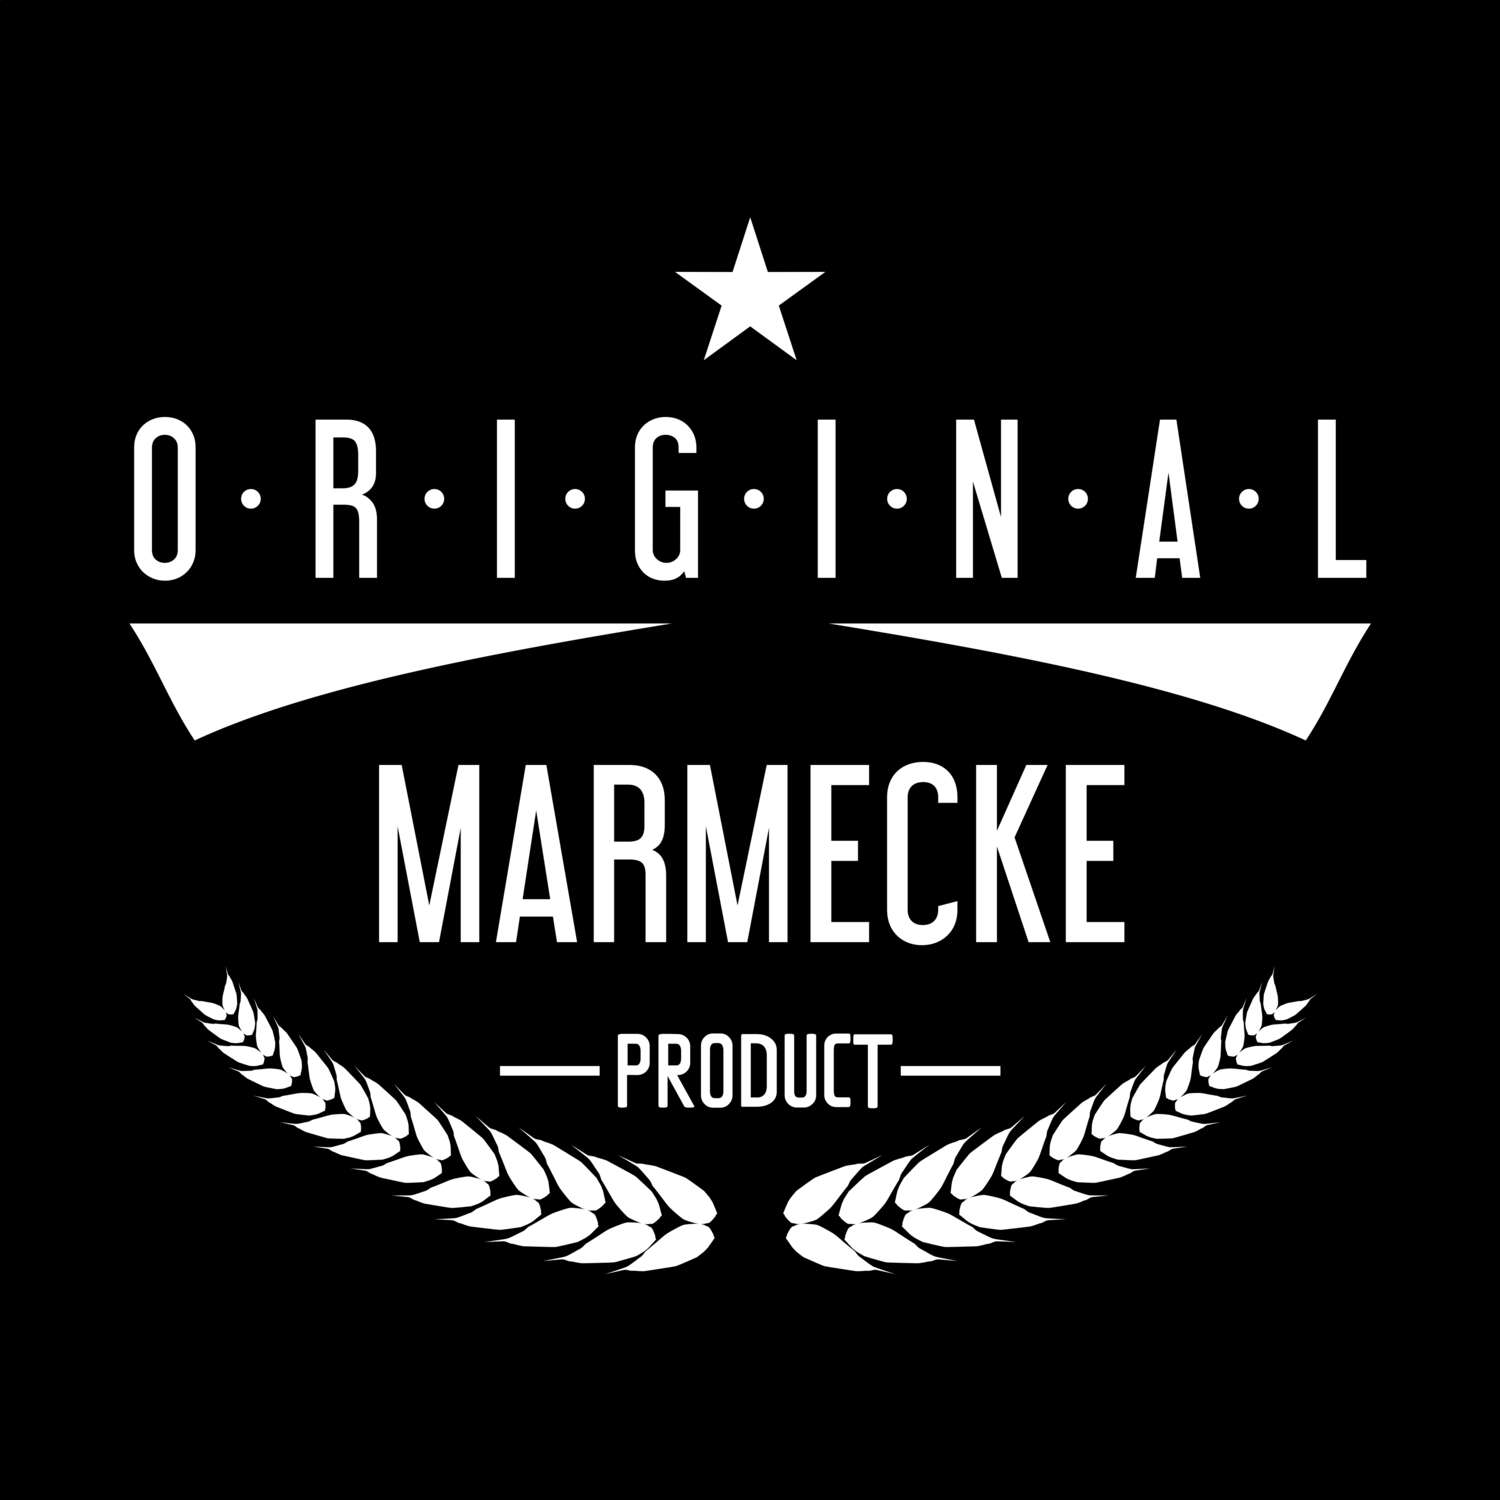 Marmecke T-Shirt »Original Product«